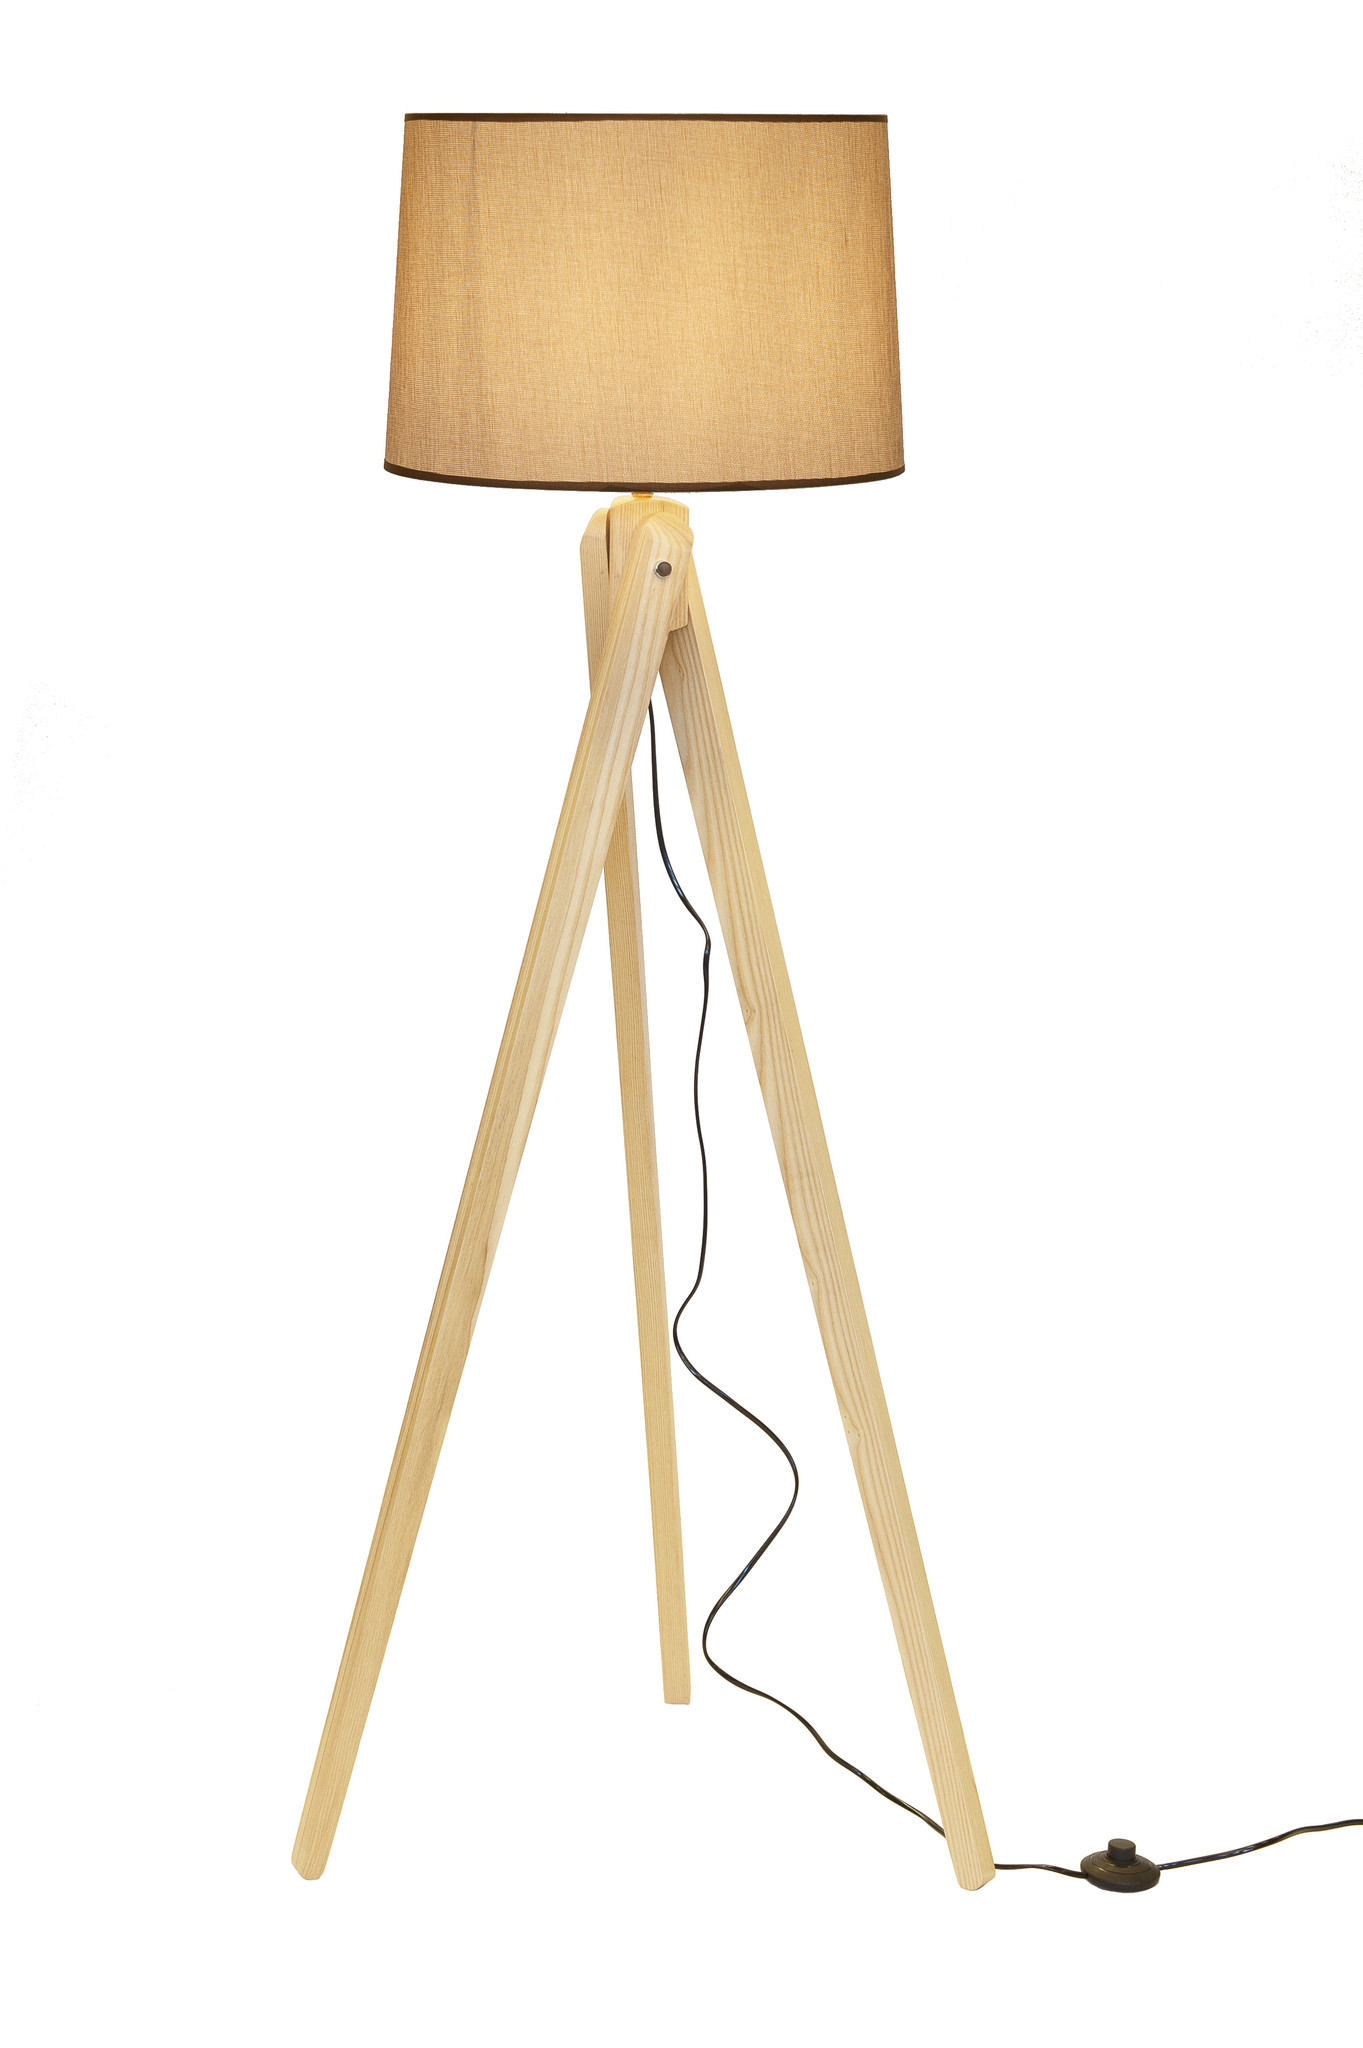 Bijwerken abortus dienblad Staande Lamp Driepoot Hout - Valott Bamboo - A tot Z LED